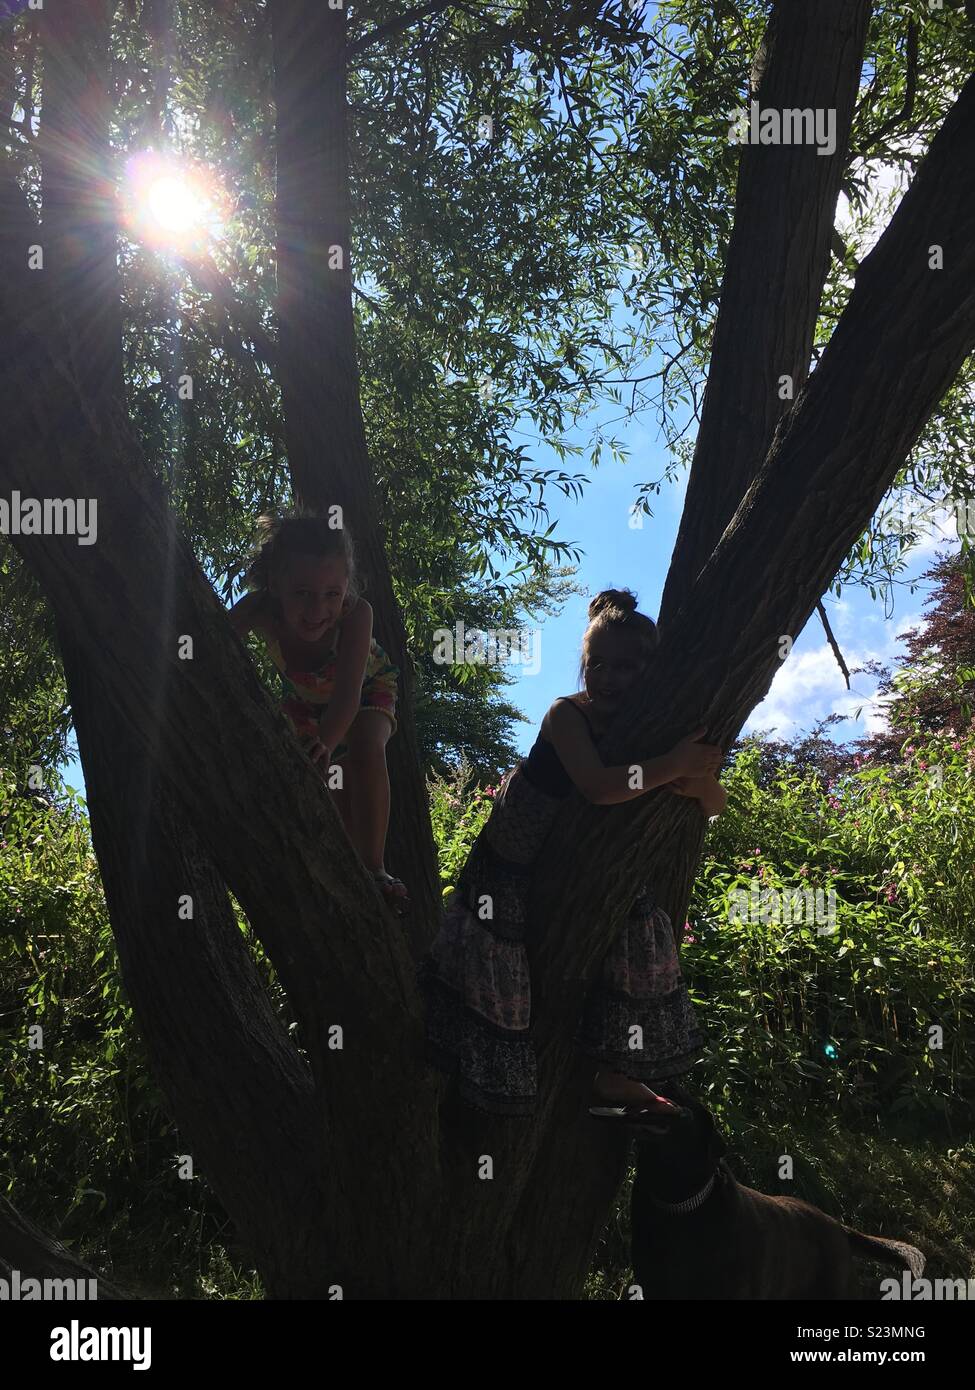 Summer time fun.sun filtering through the trees while kids joyfully play. Stock Photo